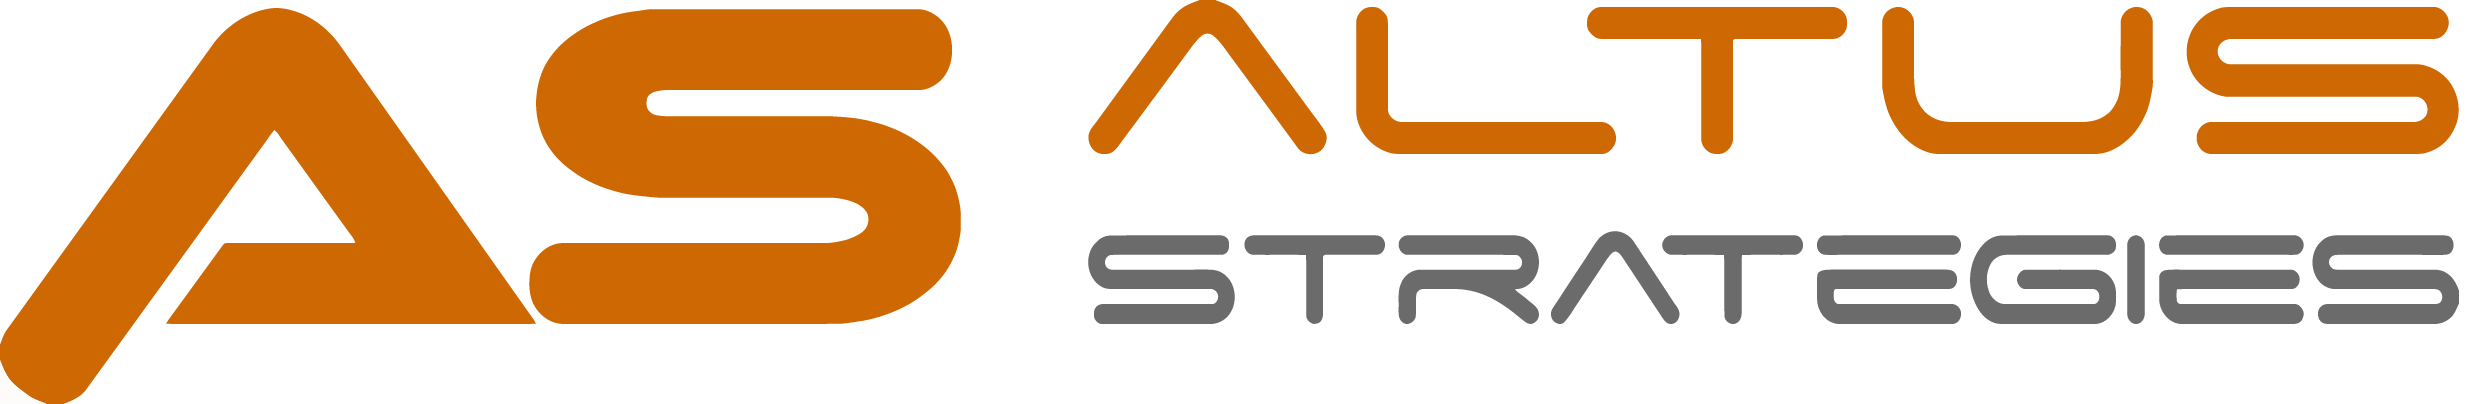 Altus Strategies Plc, Thursday, January 7, 2021, Press release picture